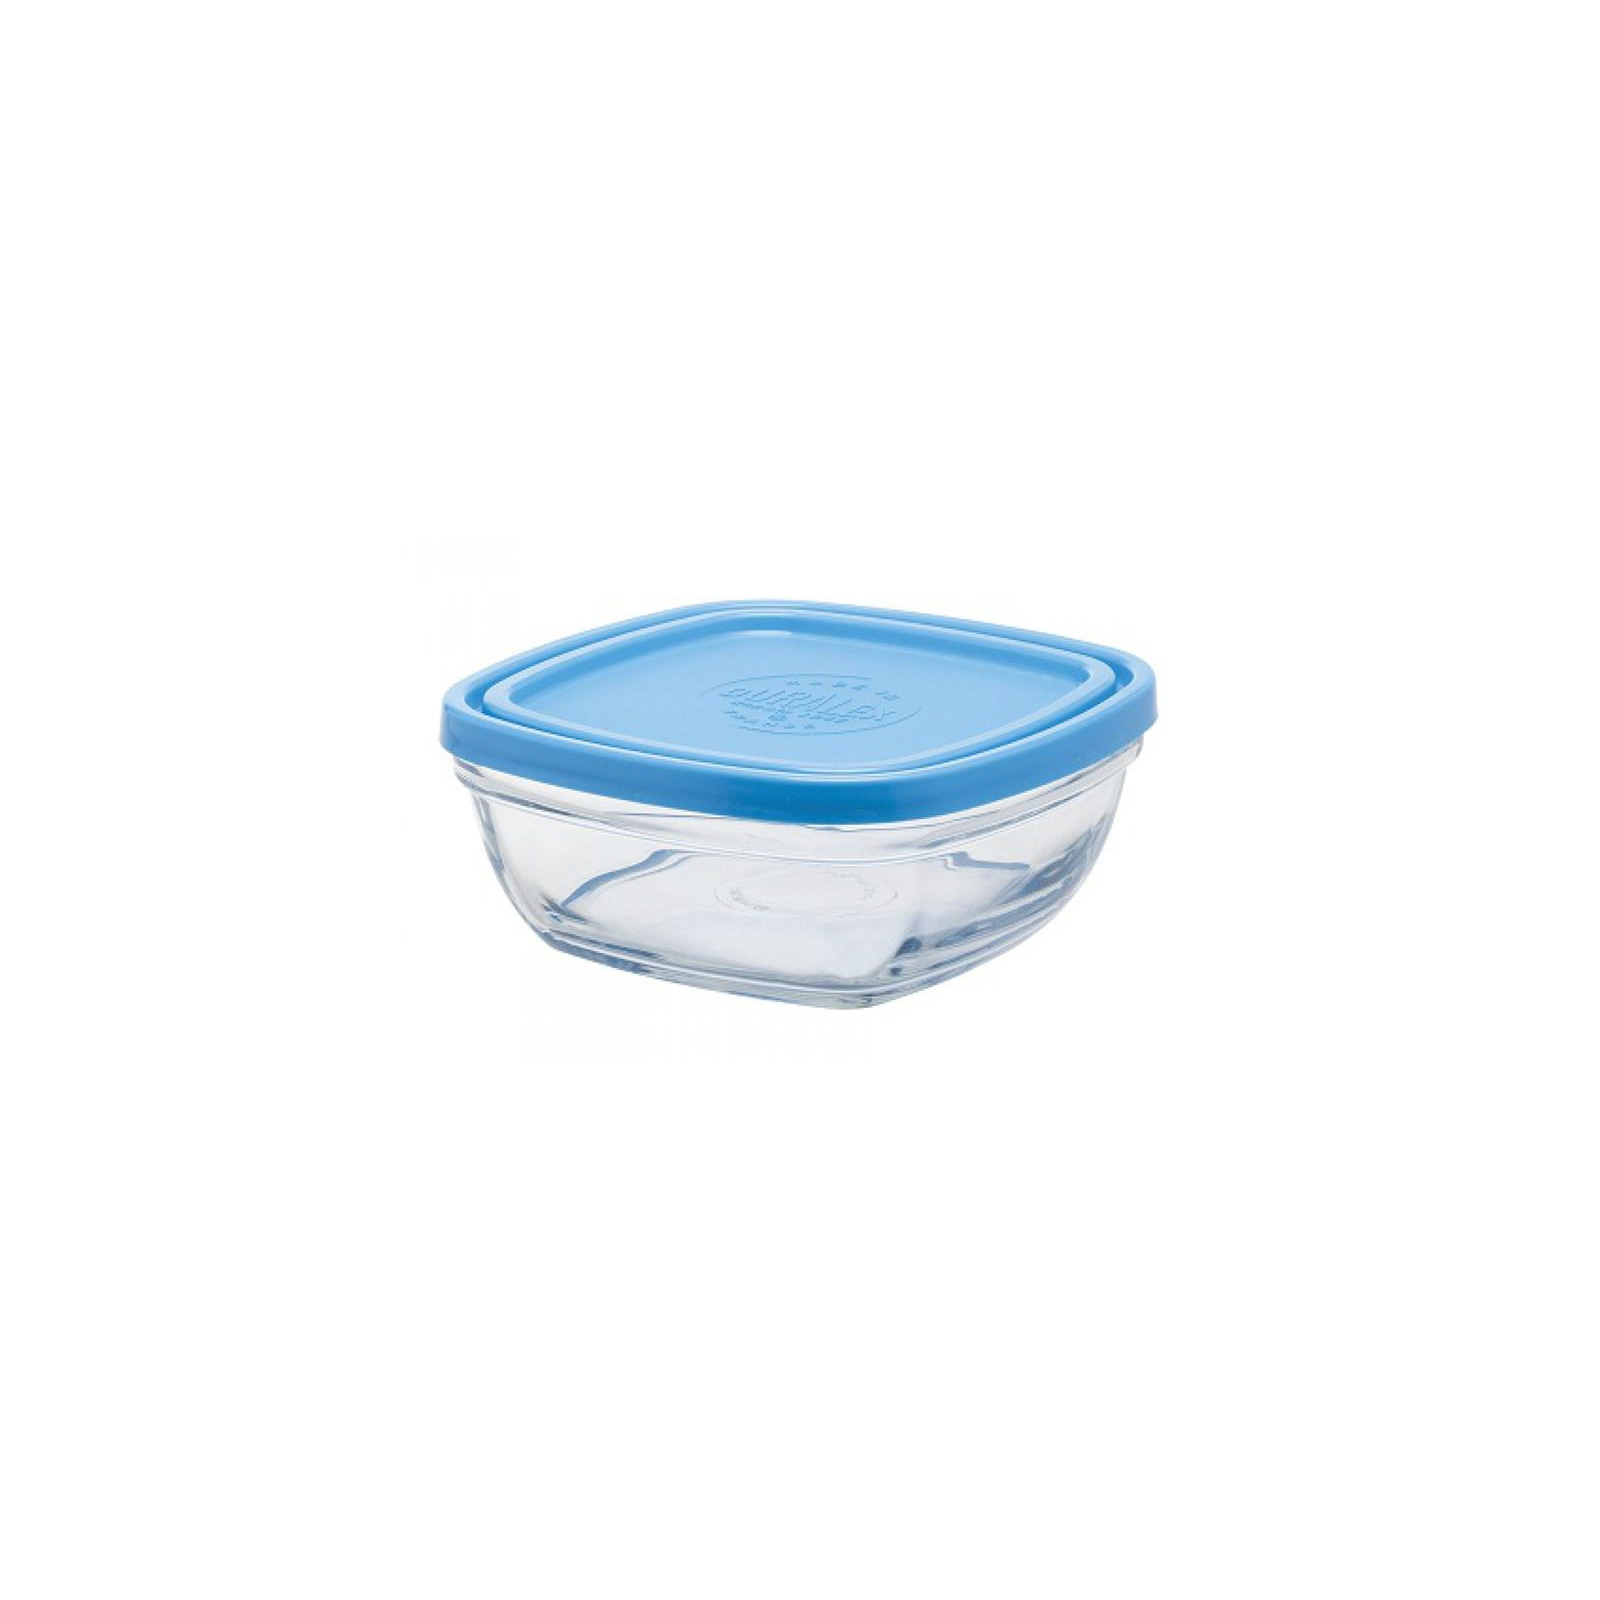 Харчовий контейнер Duralex Lys Carre Quadrate Blue 3100 мл 23 см (9024AM06)